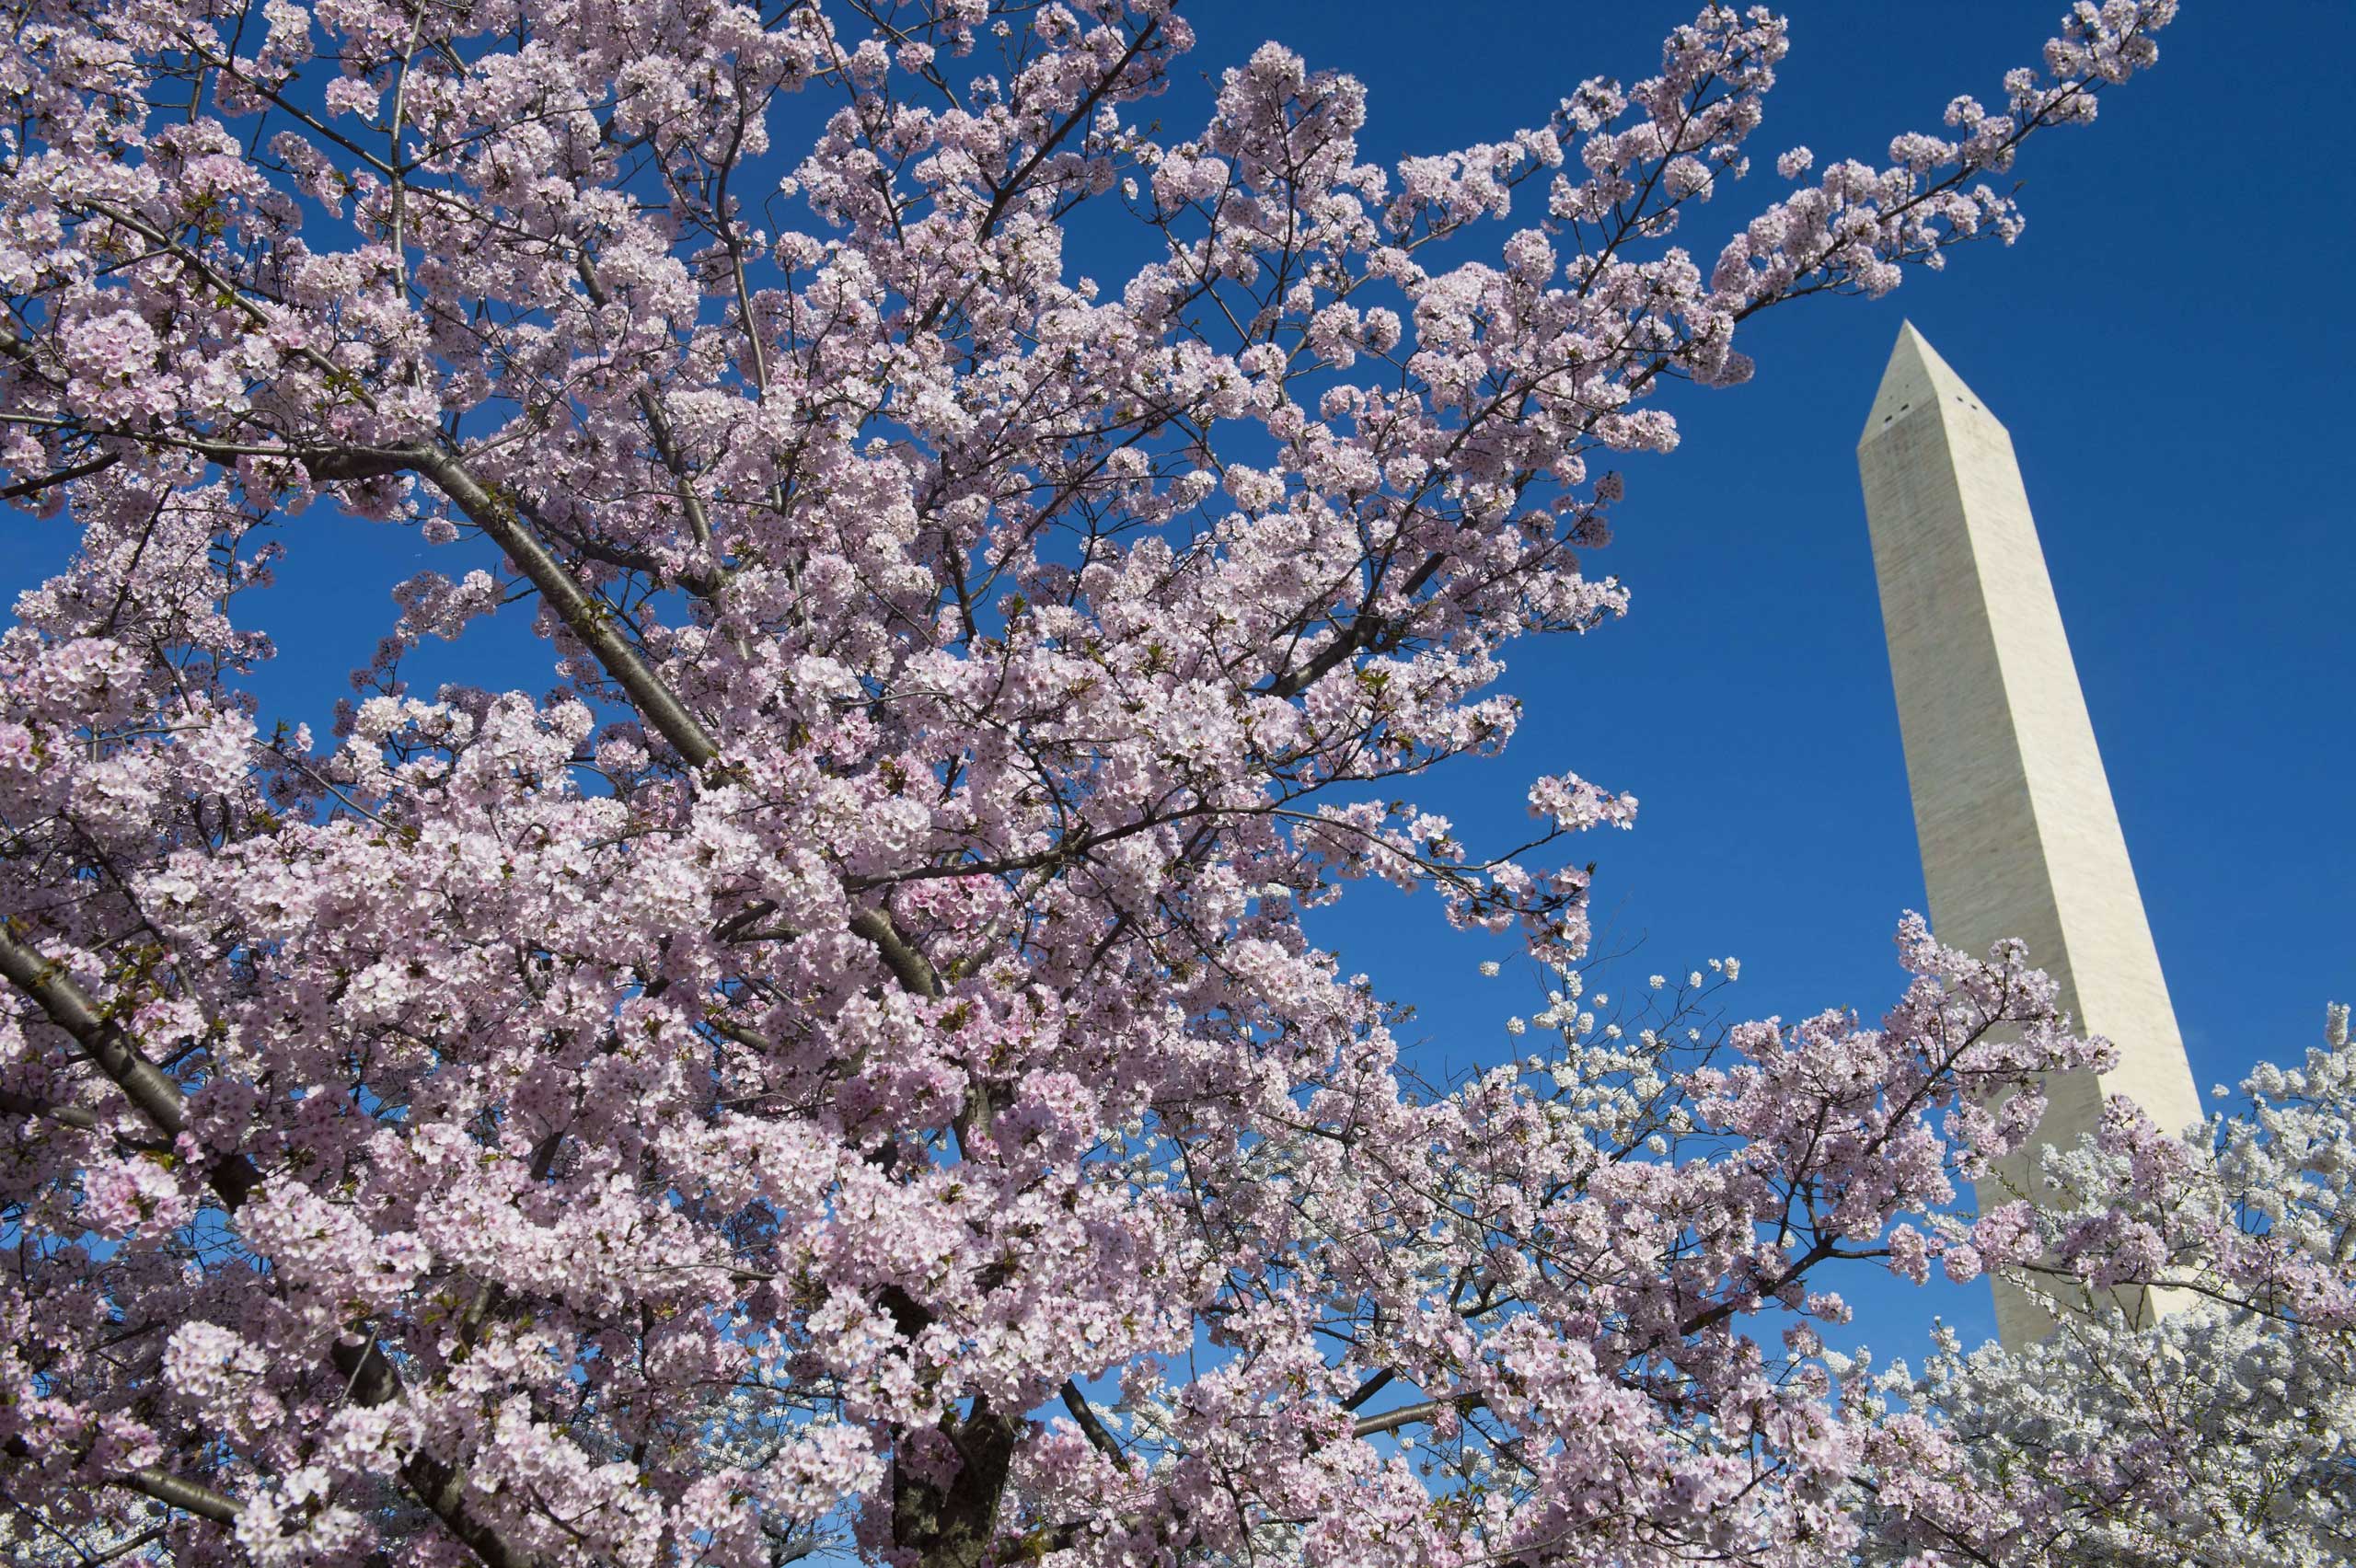 Cherry trees blossom near the Washington Monument on the National Mall in Washington, D.C., April 11, 2015.